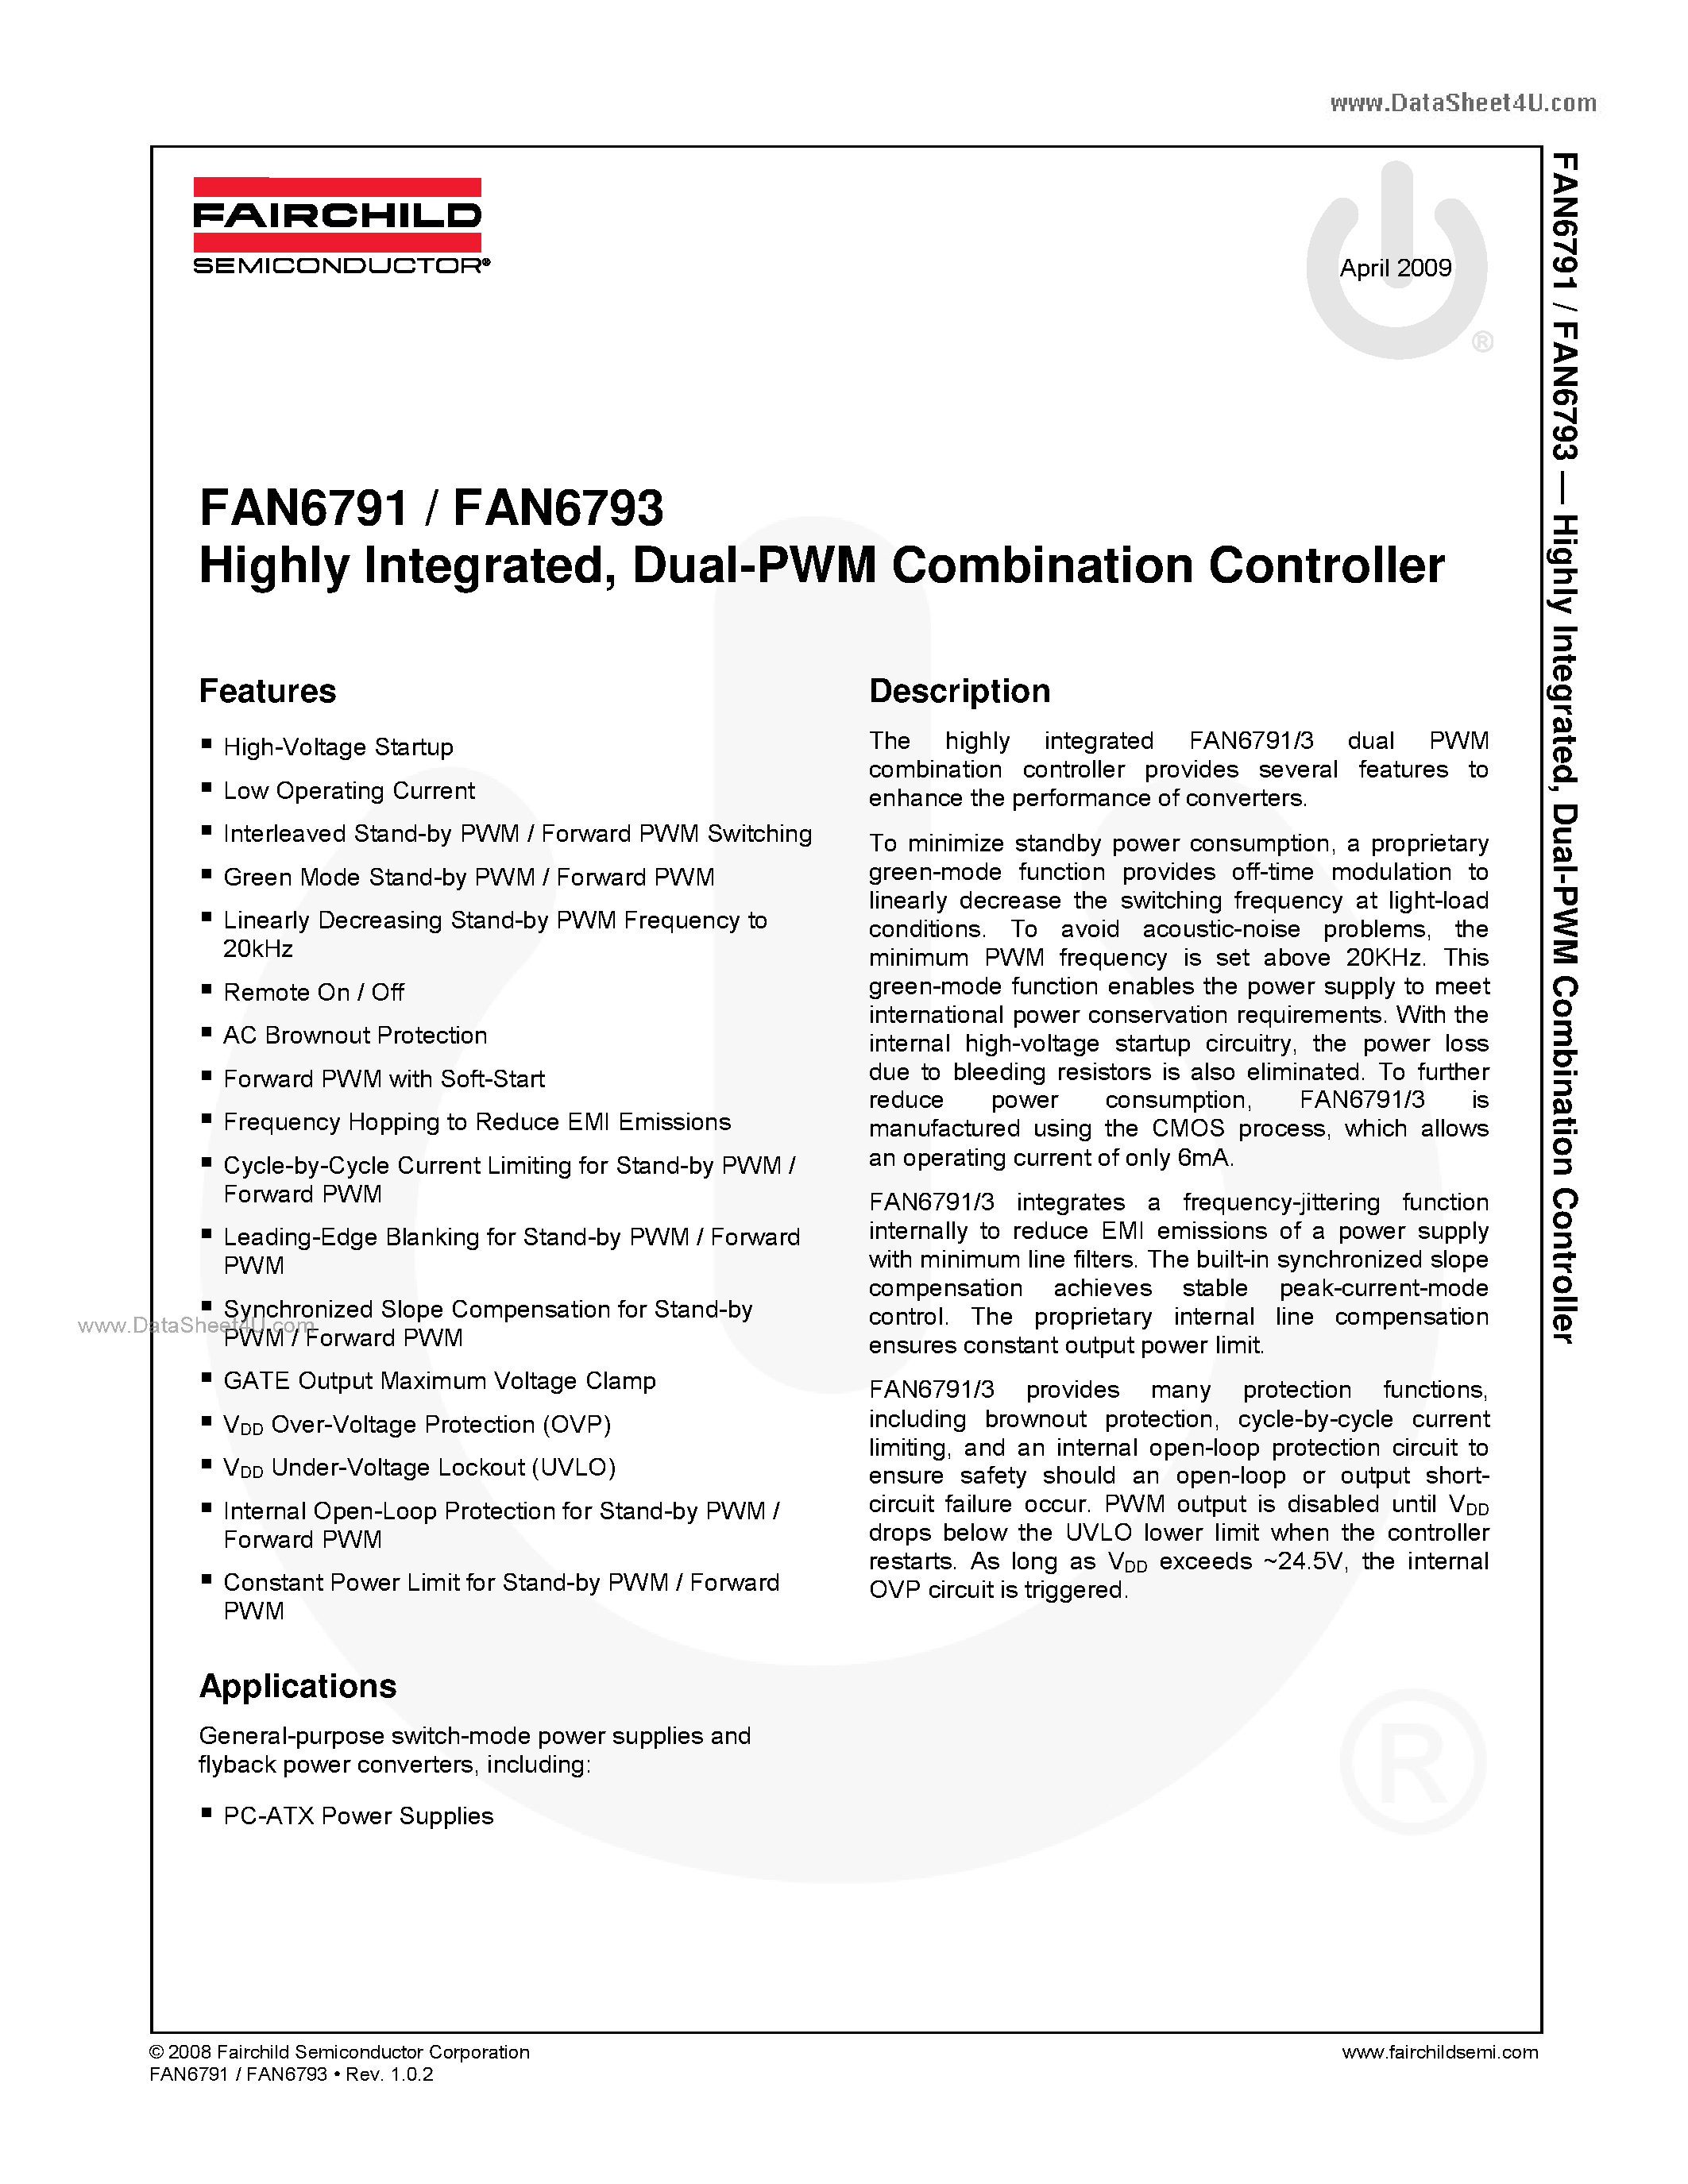 Datasheet FAN6791 - (FAN6791 / FAN6793) Dual-PWM Combination Controller page 1